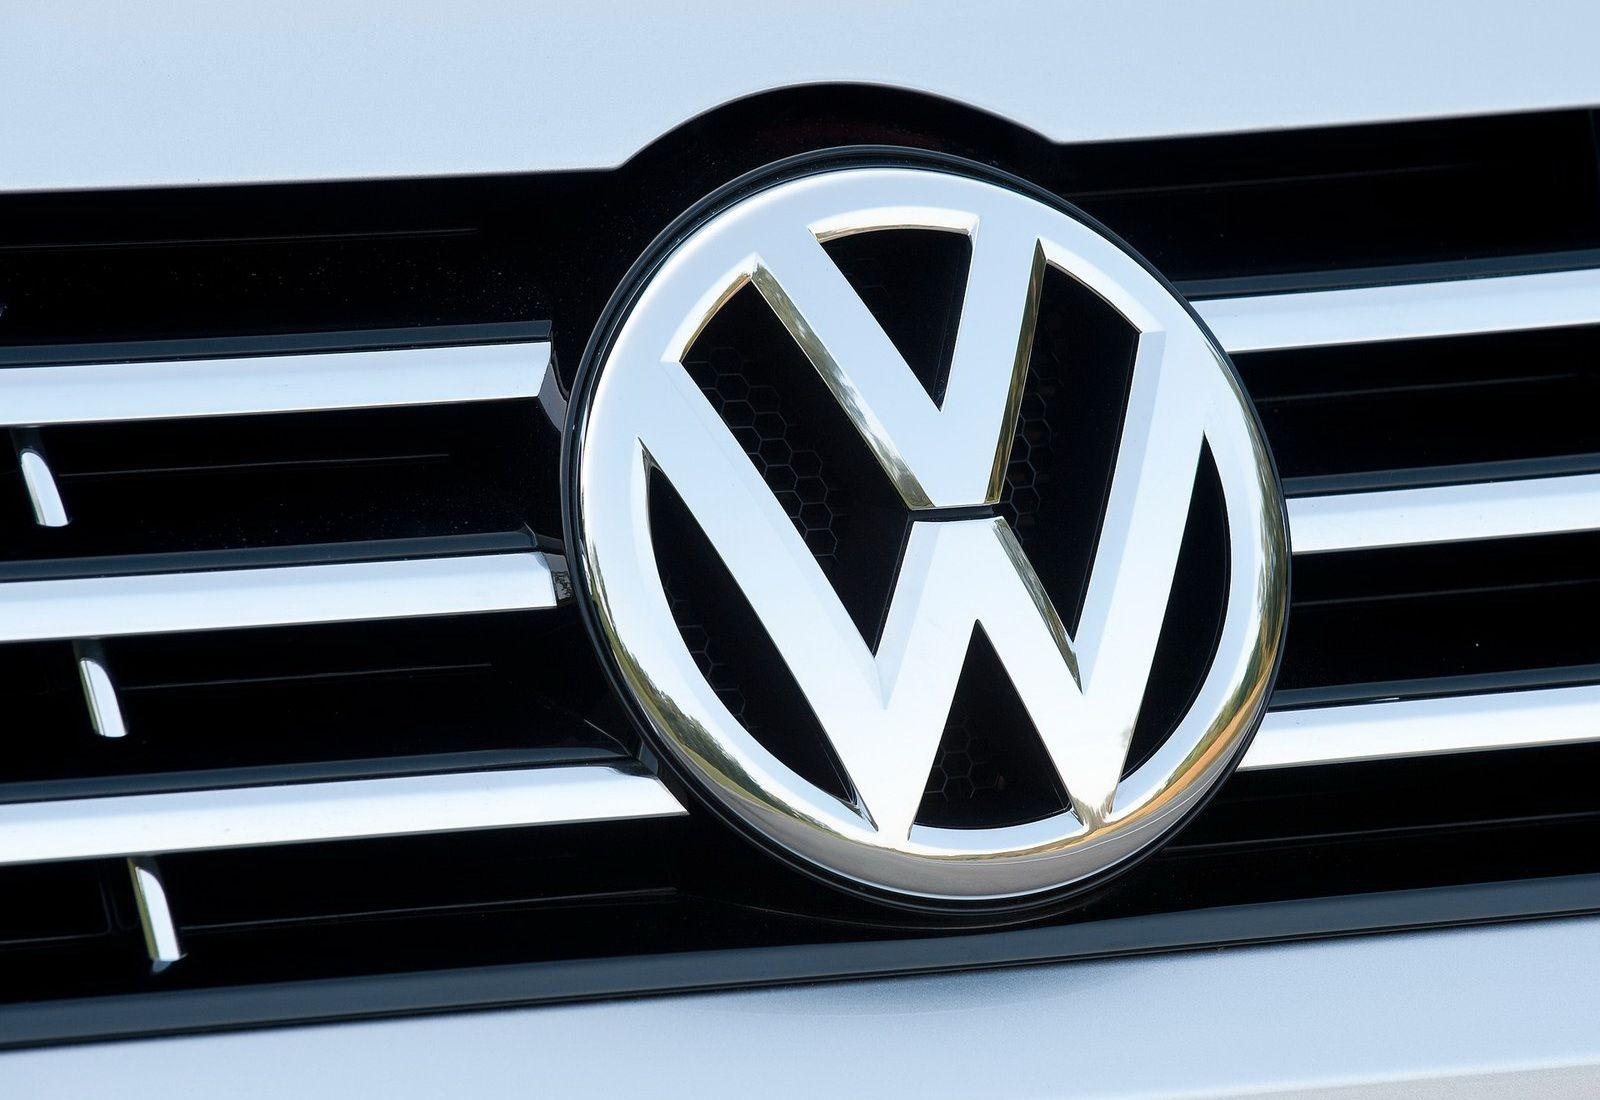 VW Car Logo - Volkswagen Logo, Volkswagen Car Symbol Meaning and History | Car ...